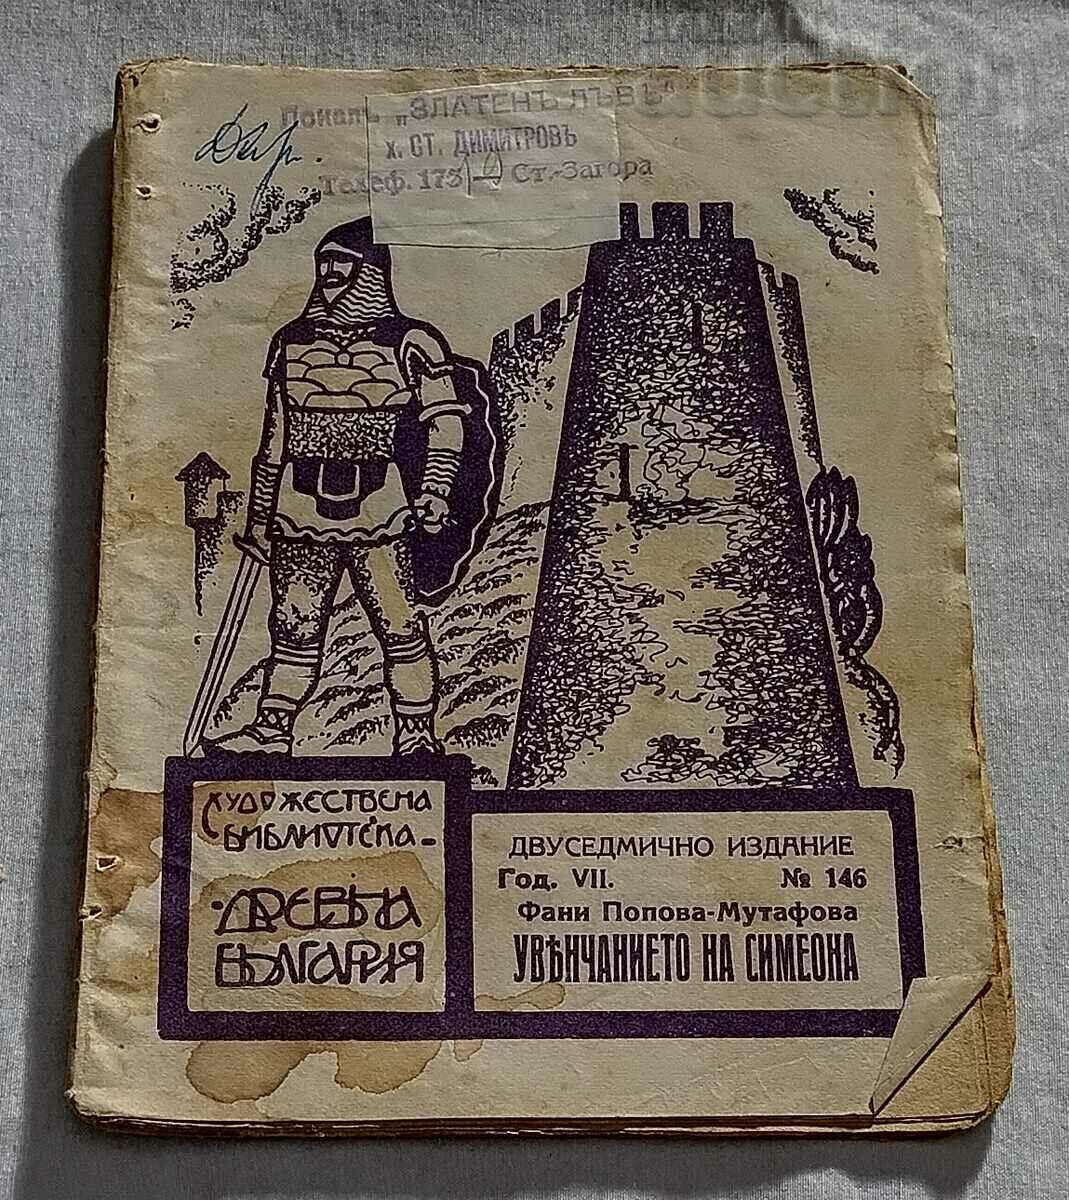 THE CORONATION OF SIMEON F. POPOVA "ANCIENT BULGARIA" 1933